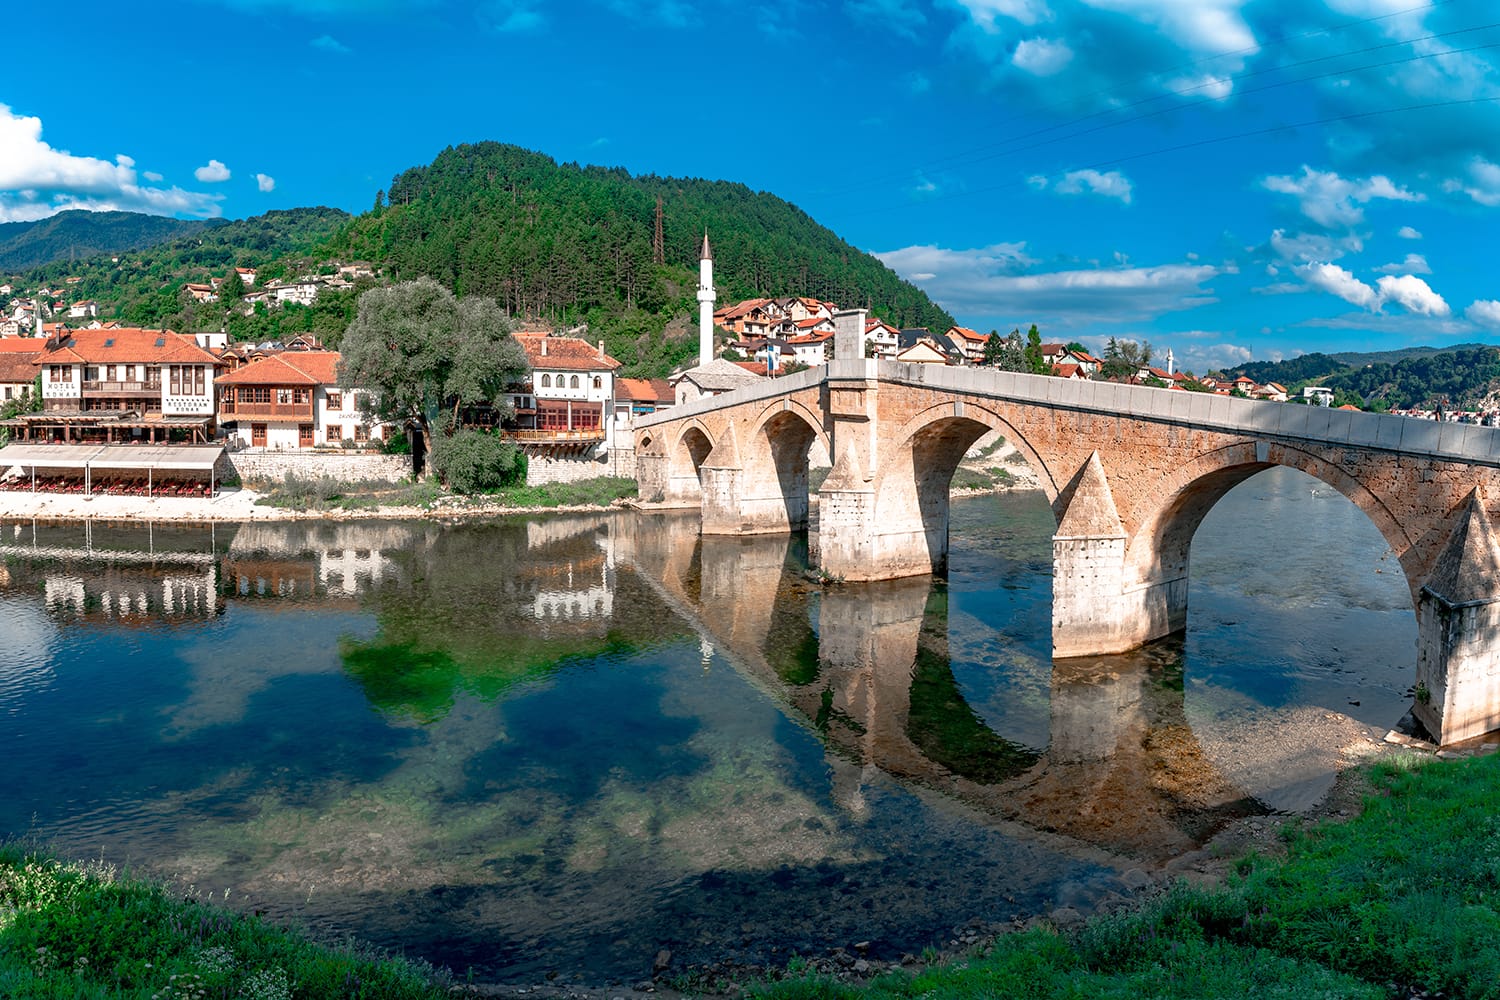 Old Bridge over Neretva River in Konjic, a small town in Bosnia and Herzegovina.